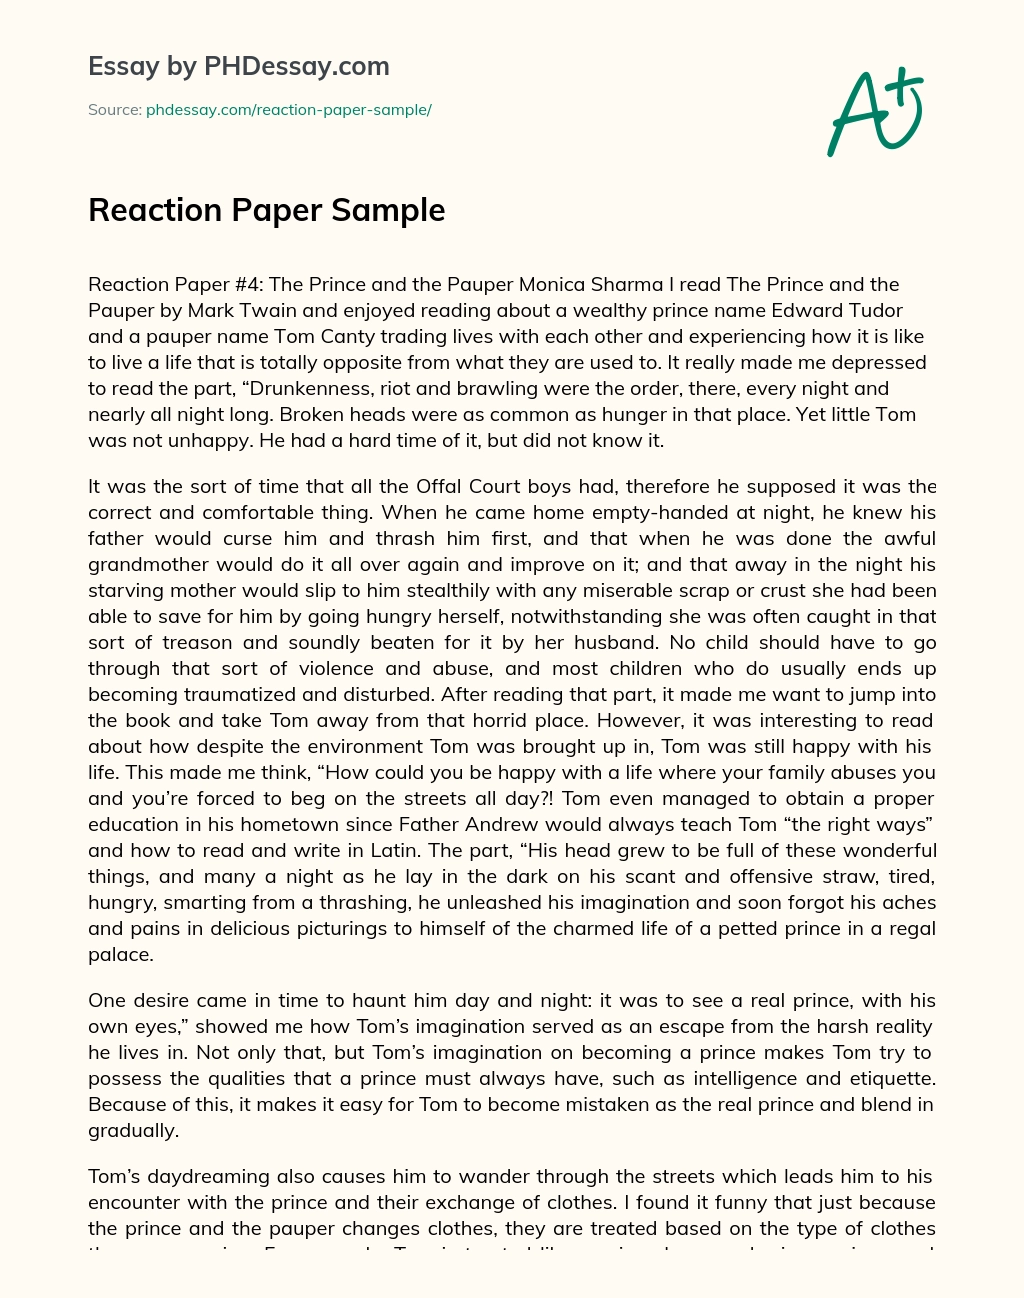 Reaction Paper Sample essay